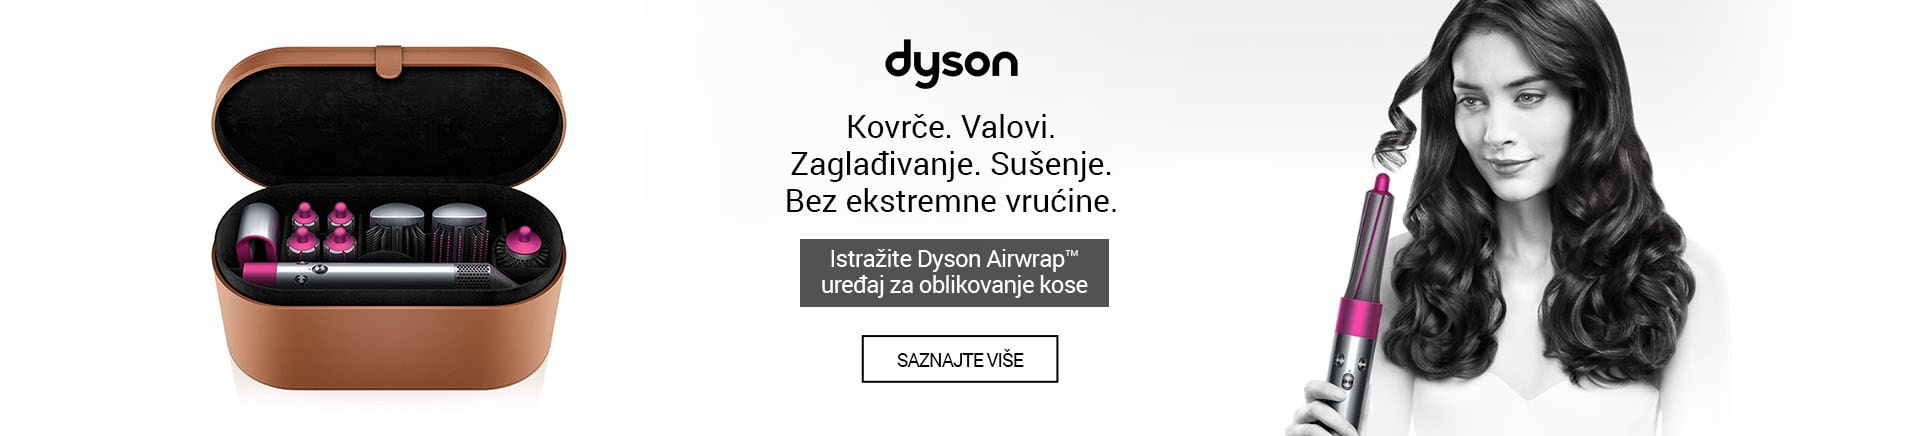 Dyson Airwrap uređaj za stiliziranje i sušenje kose